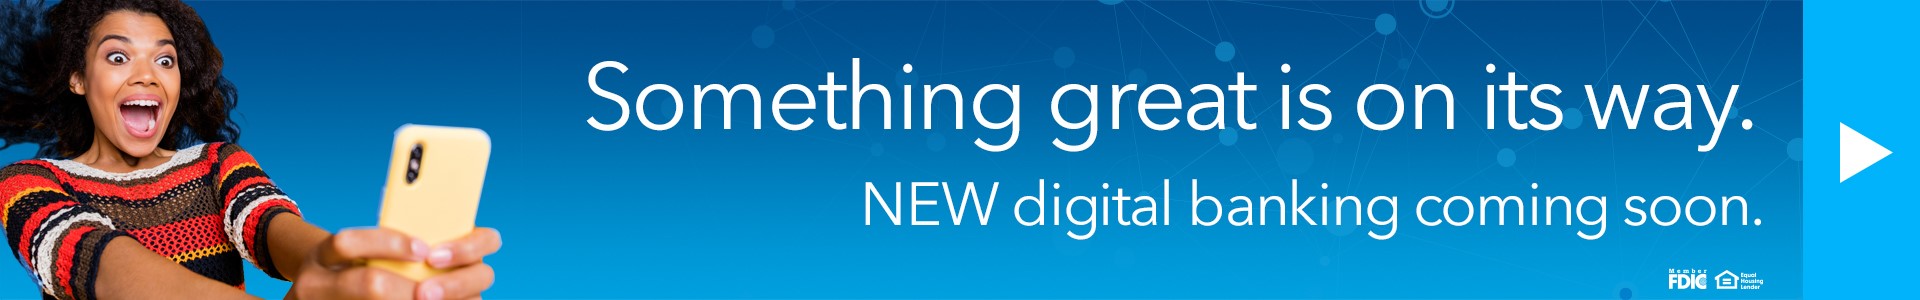 Digital Banking - homepage banner ad